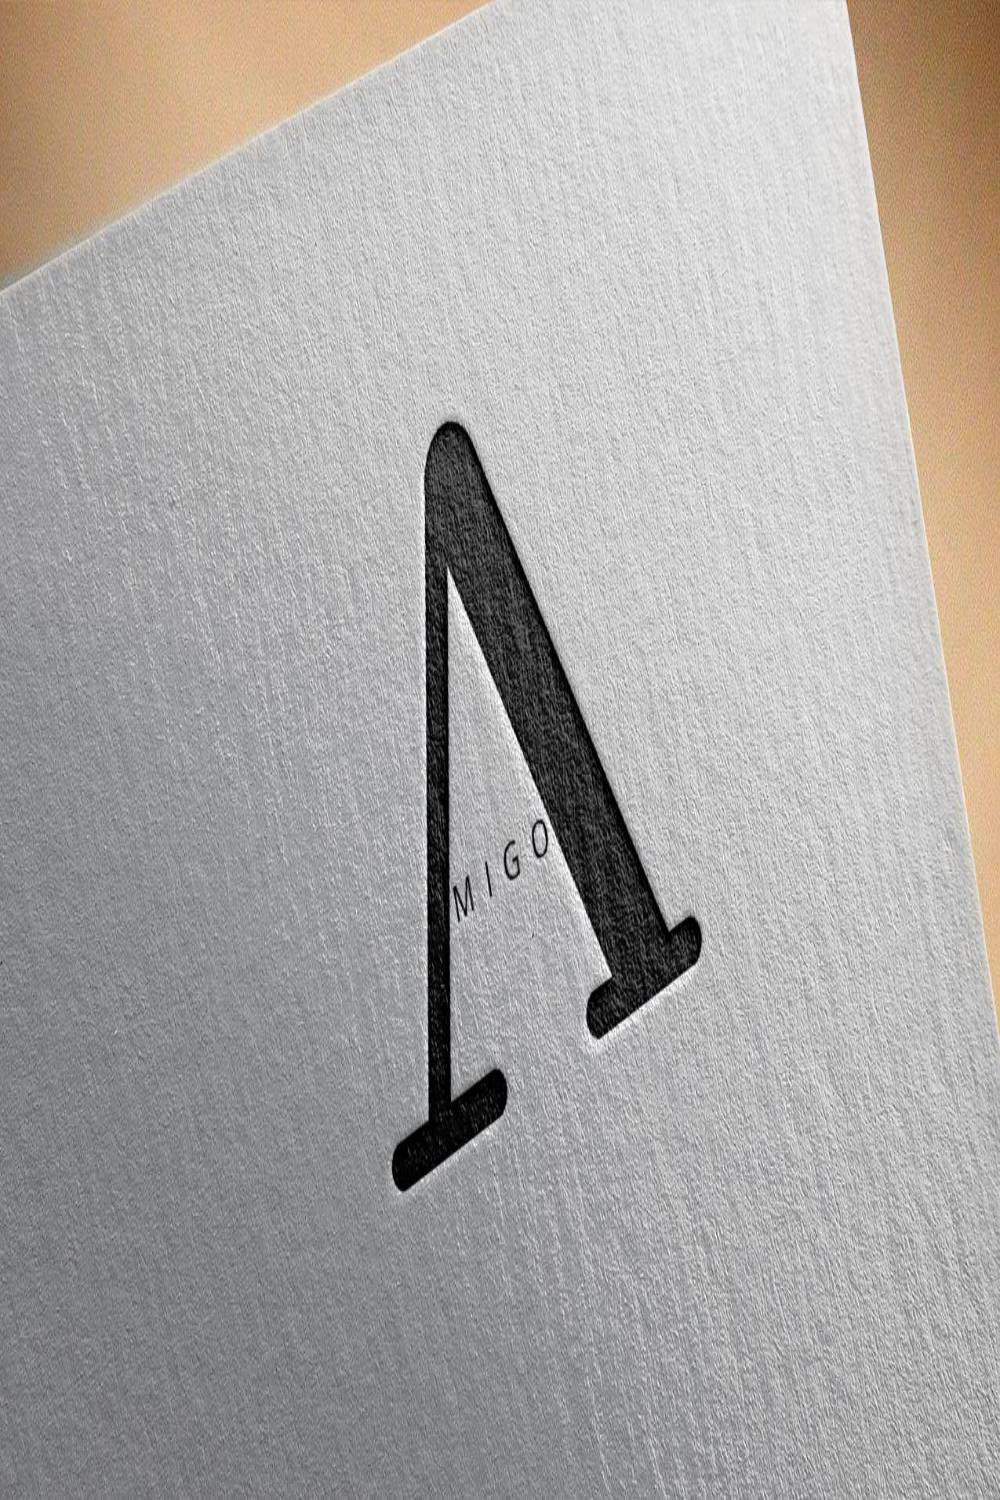 Amigo Letter A Logo Design pinterest image.